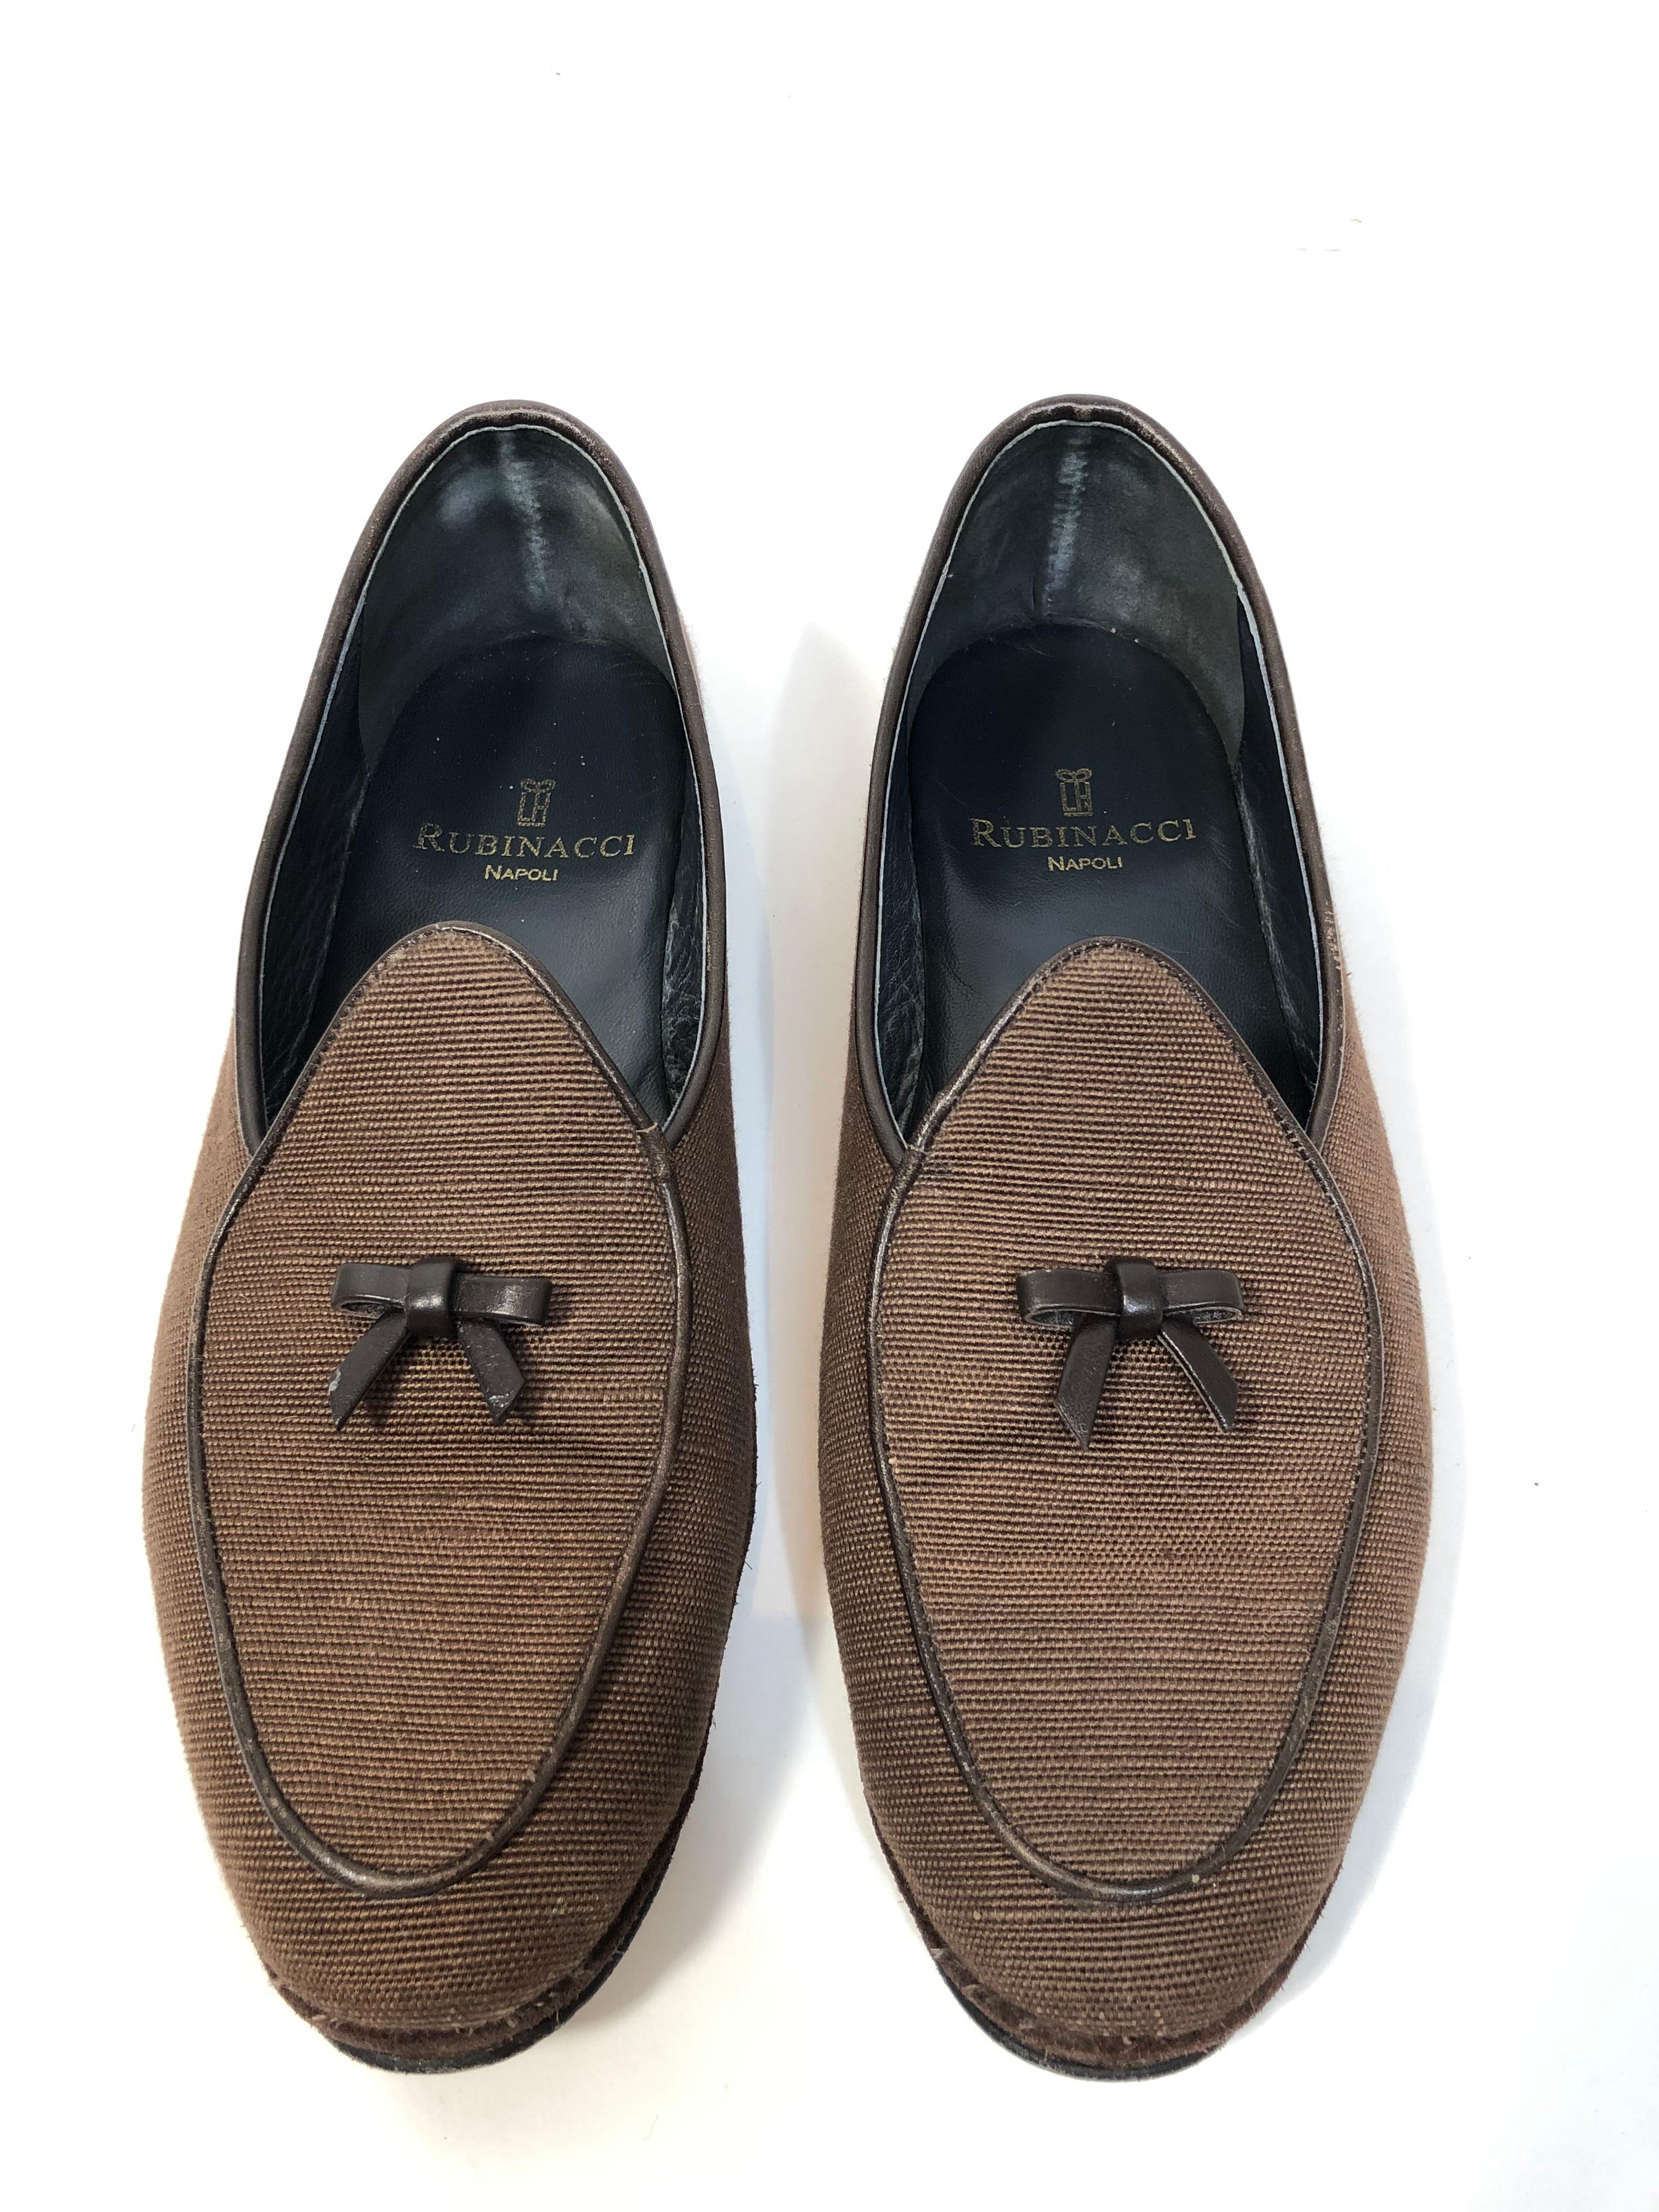 Men's Brown Linen Rubinacci Loafers w/ Leather Detail
Size 42.5 EU